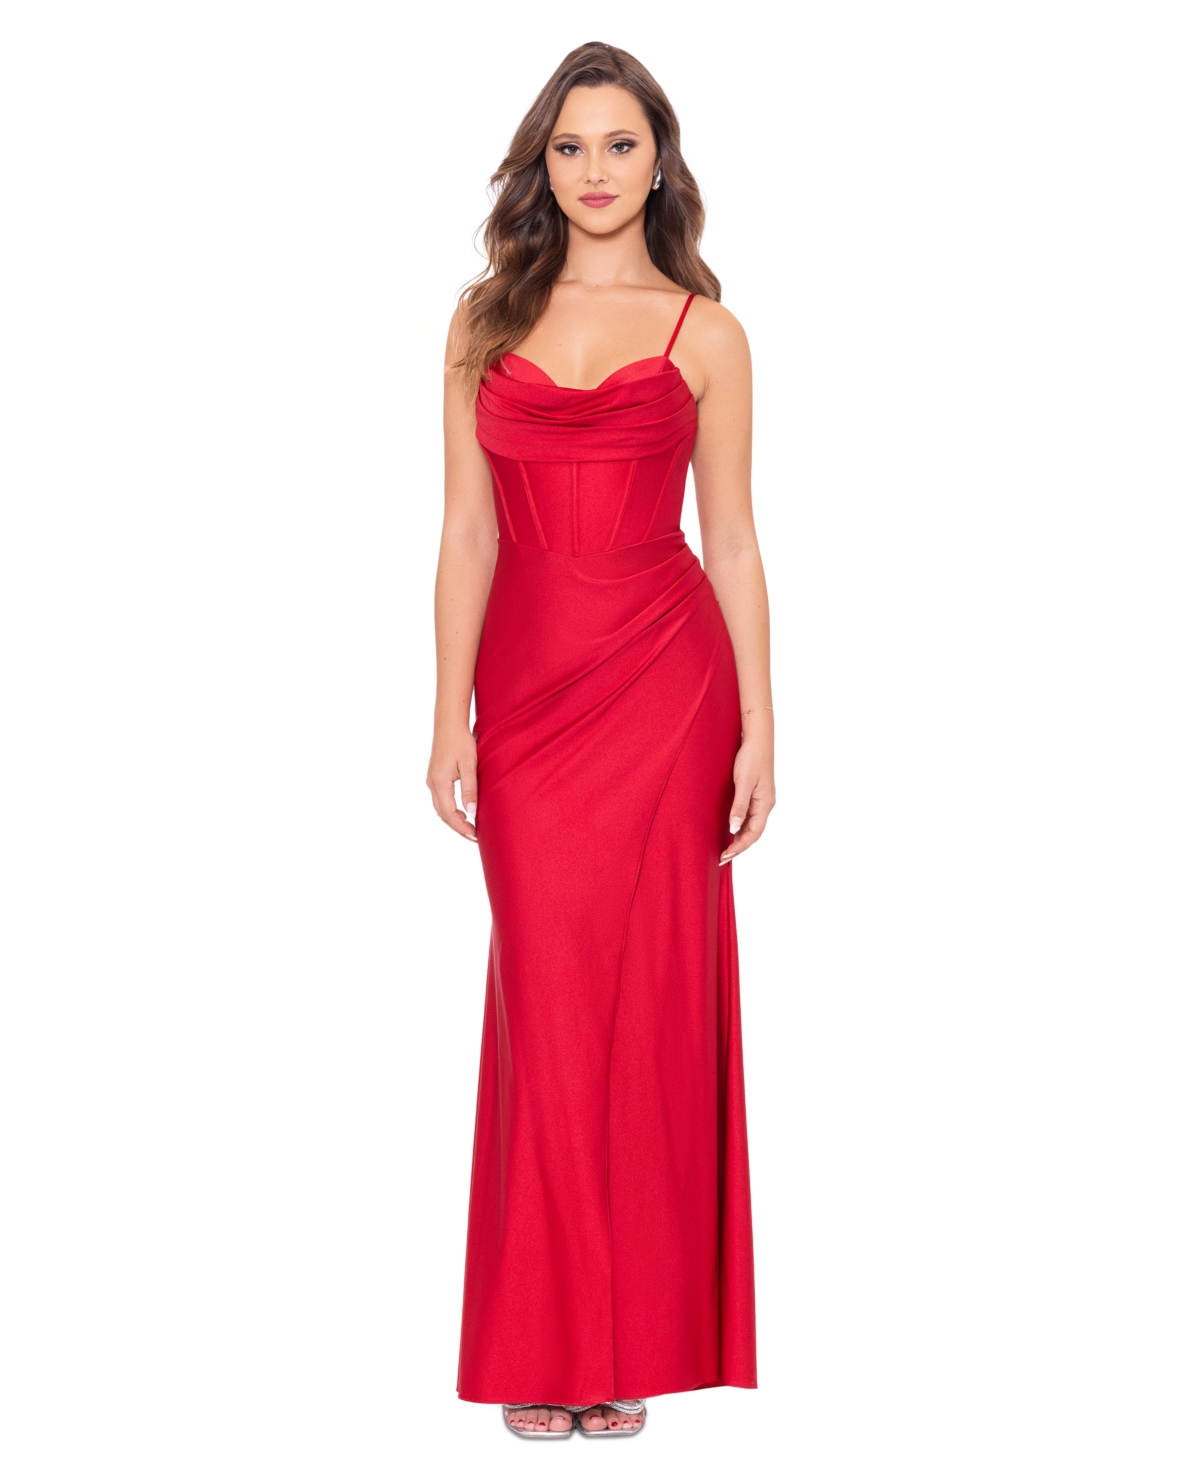 Women's Drape-Neck Sleeveless Sheath Gown - Red